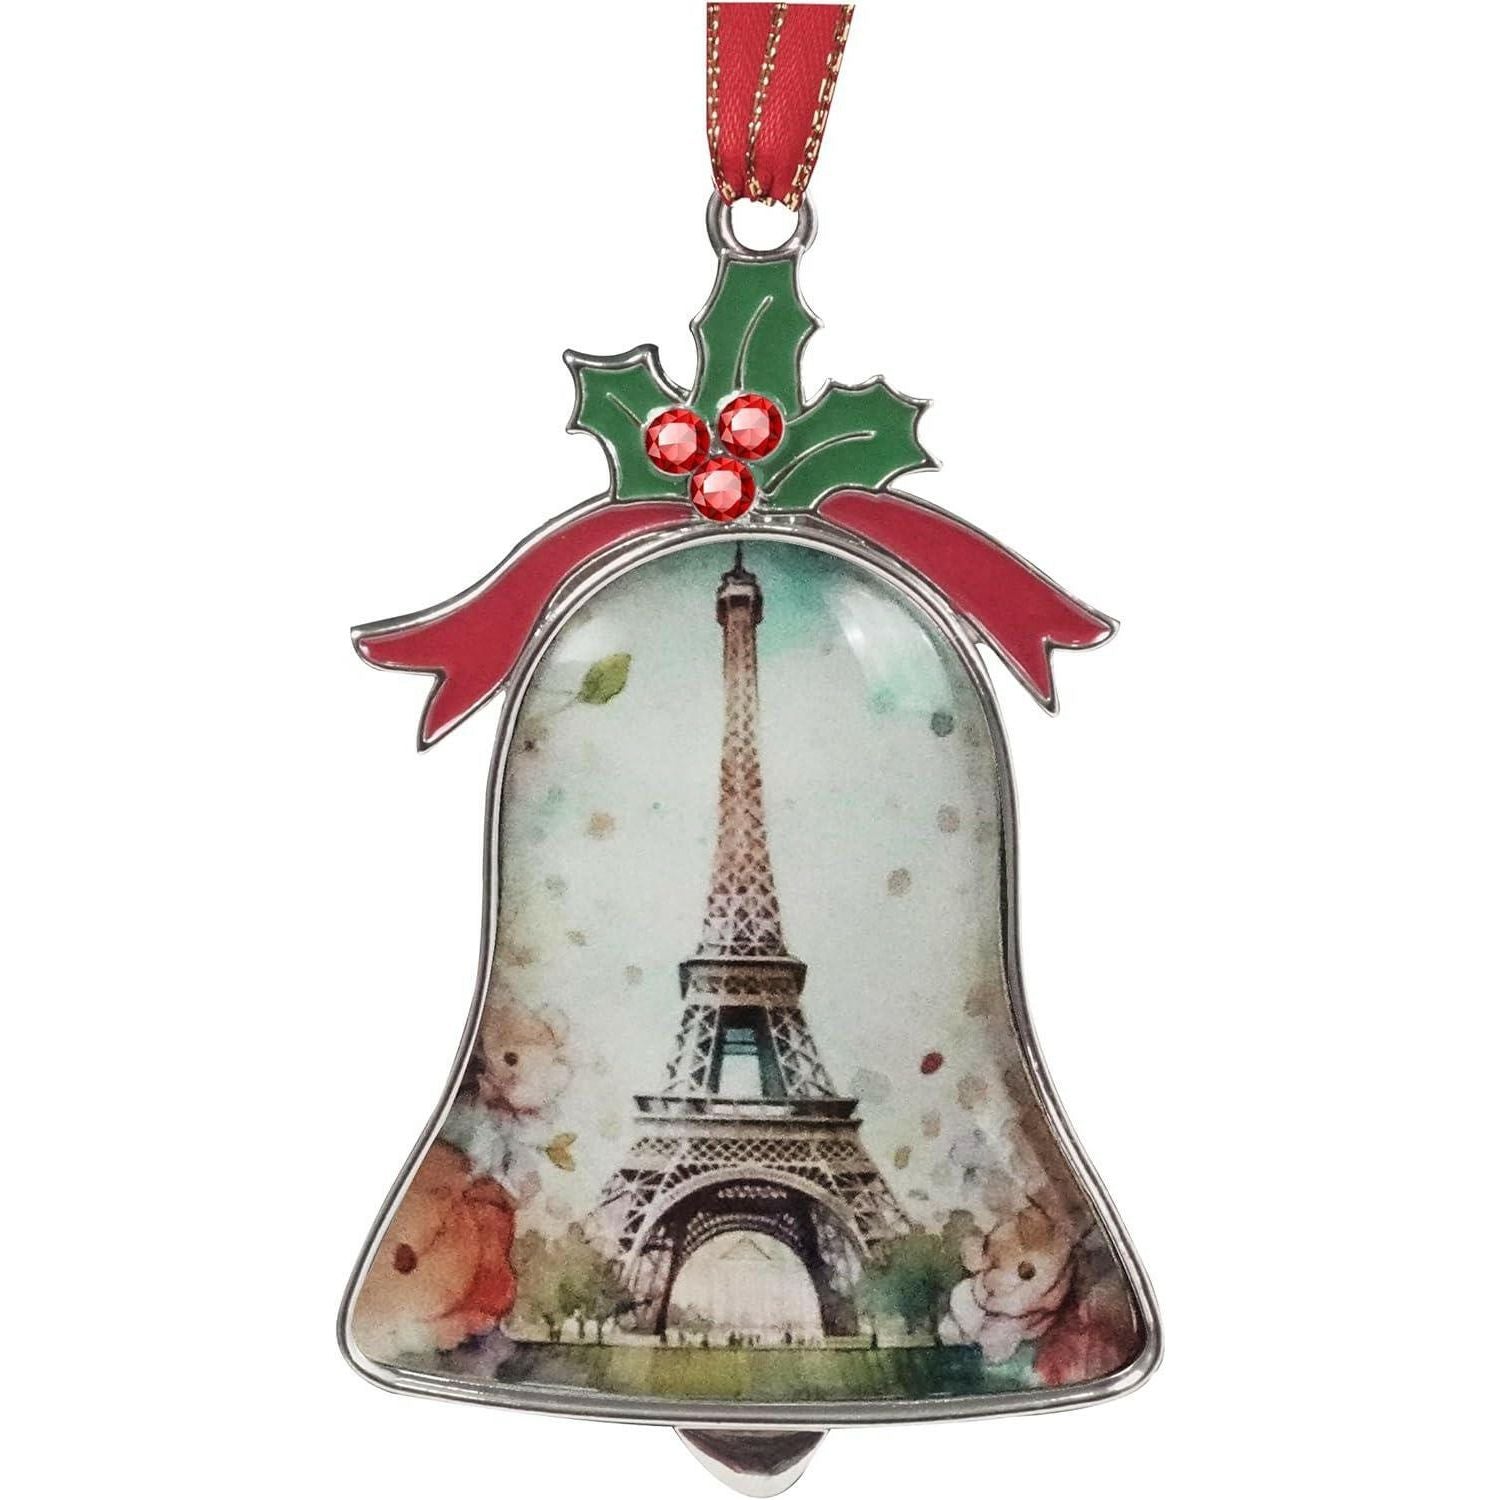 Vintage Paris Eiffel Tower on Christmas Bell Ornament Pendant Decoration Metal Hanging Christmas Ornaments for Home Decoration Holidays Decor